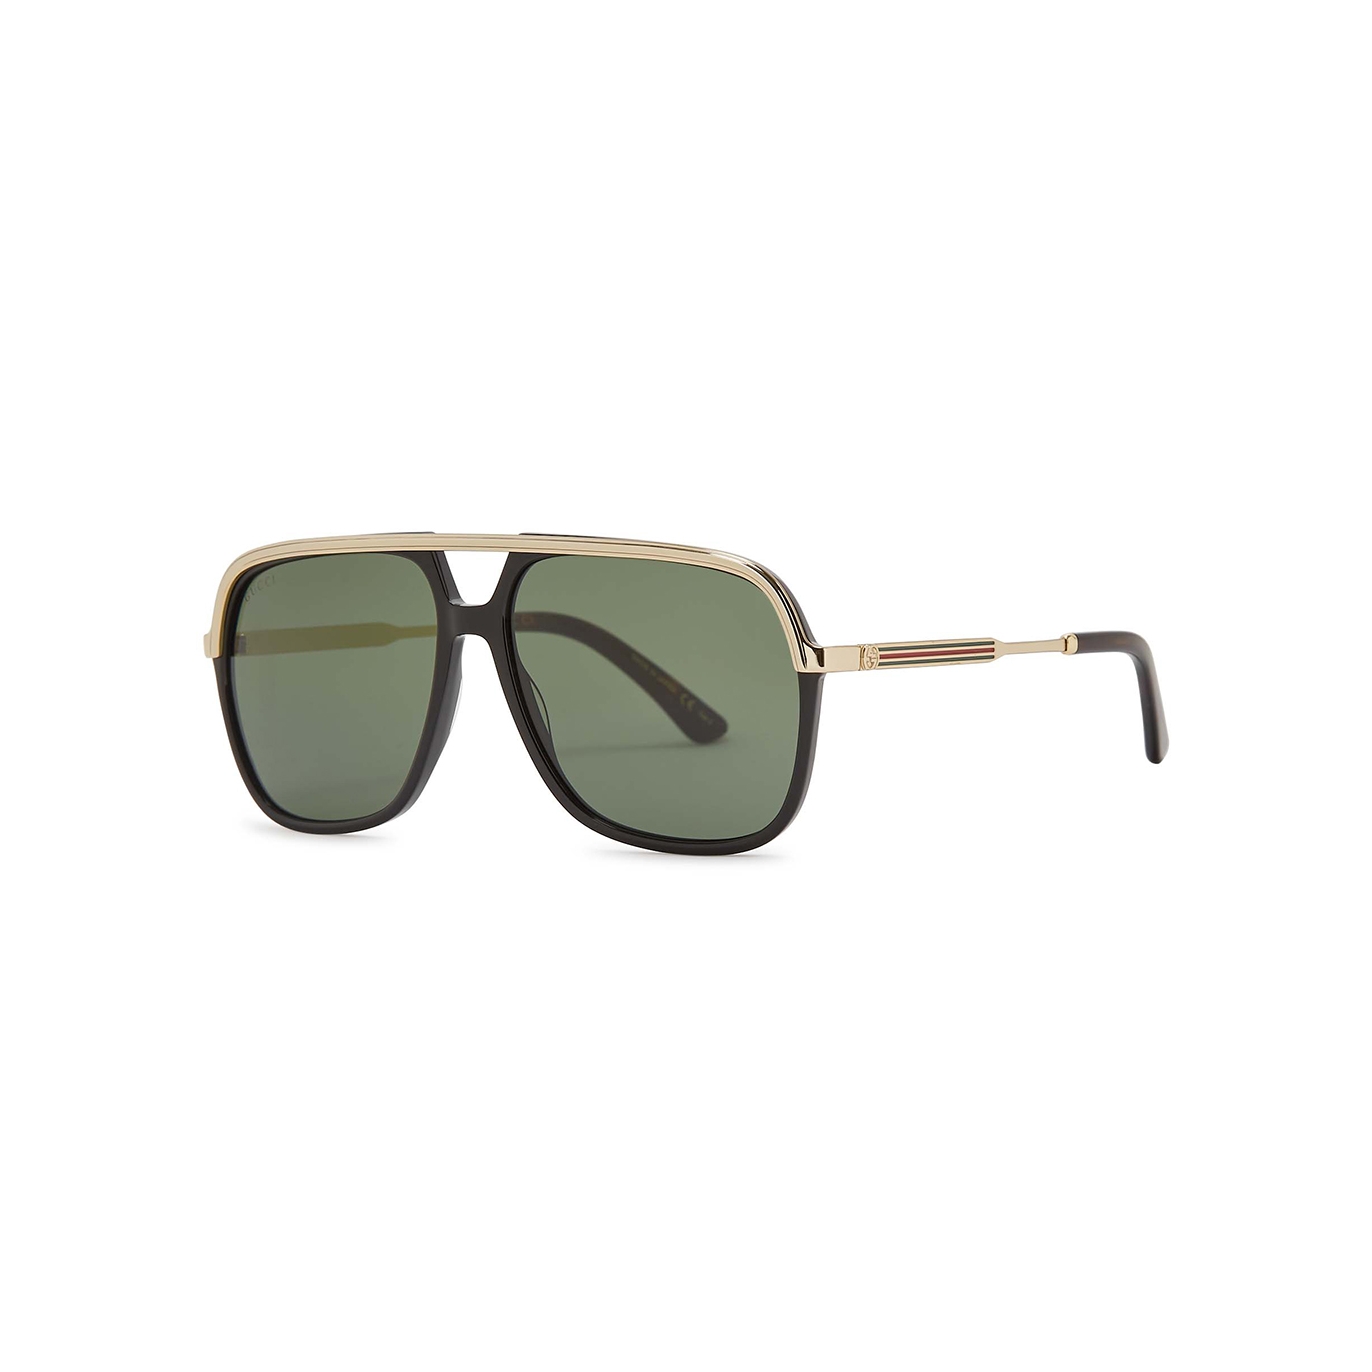 Gucci Black Aviator-style Sunglasses, Sunglasses, Black, Green Lenses